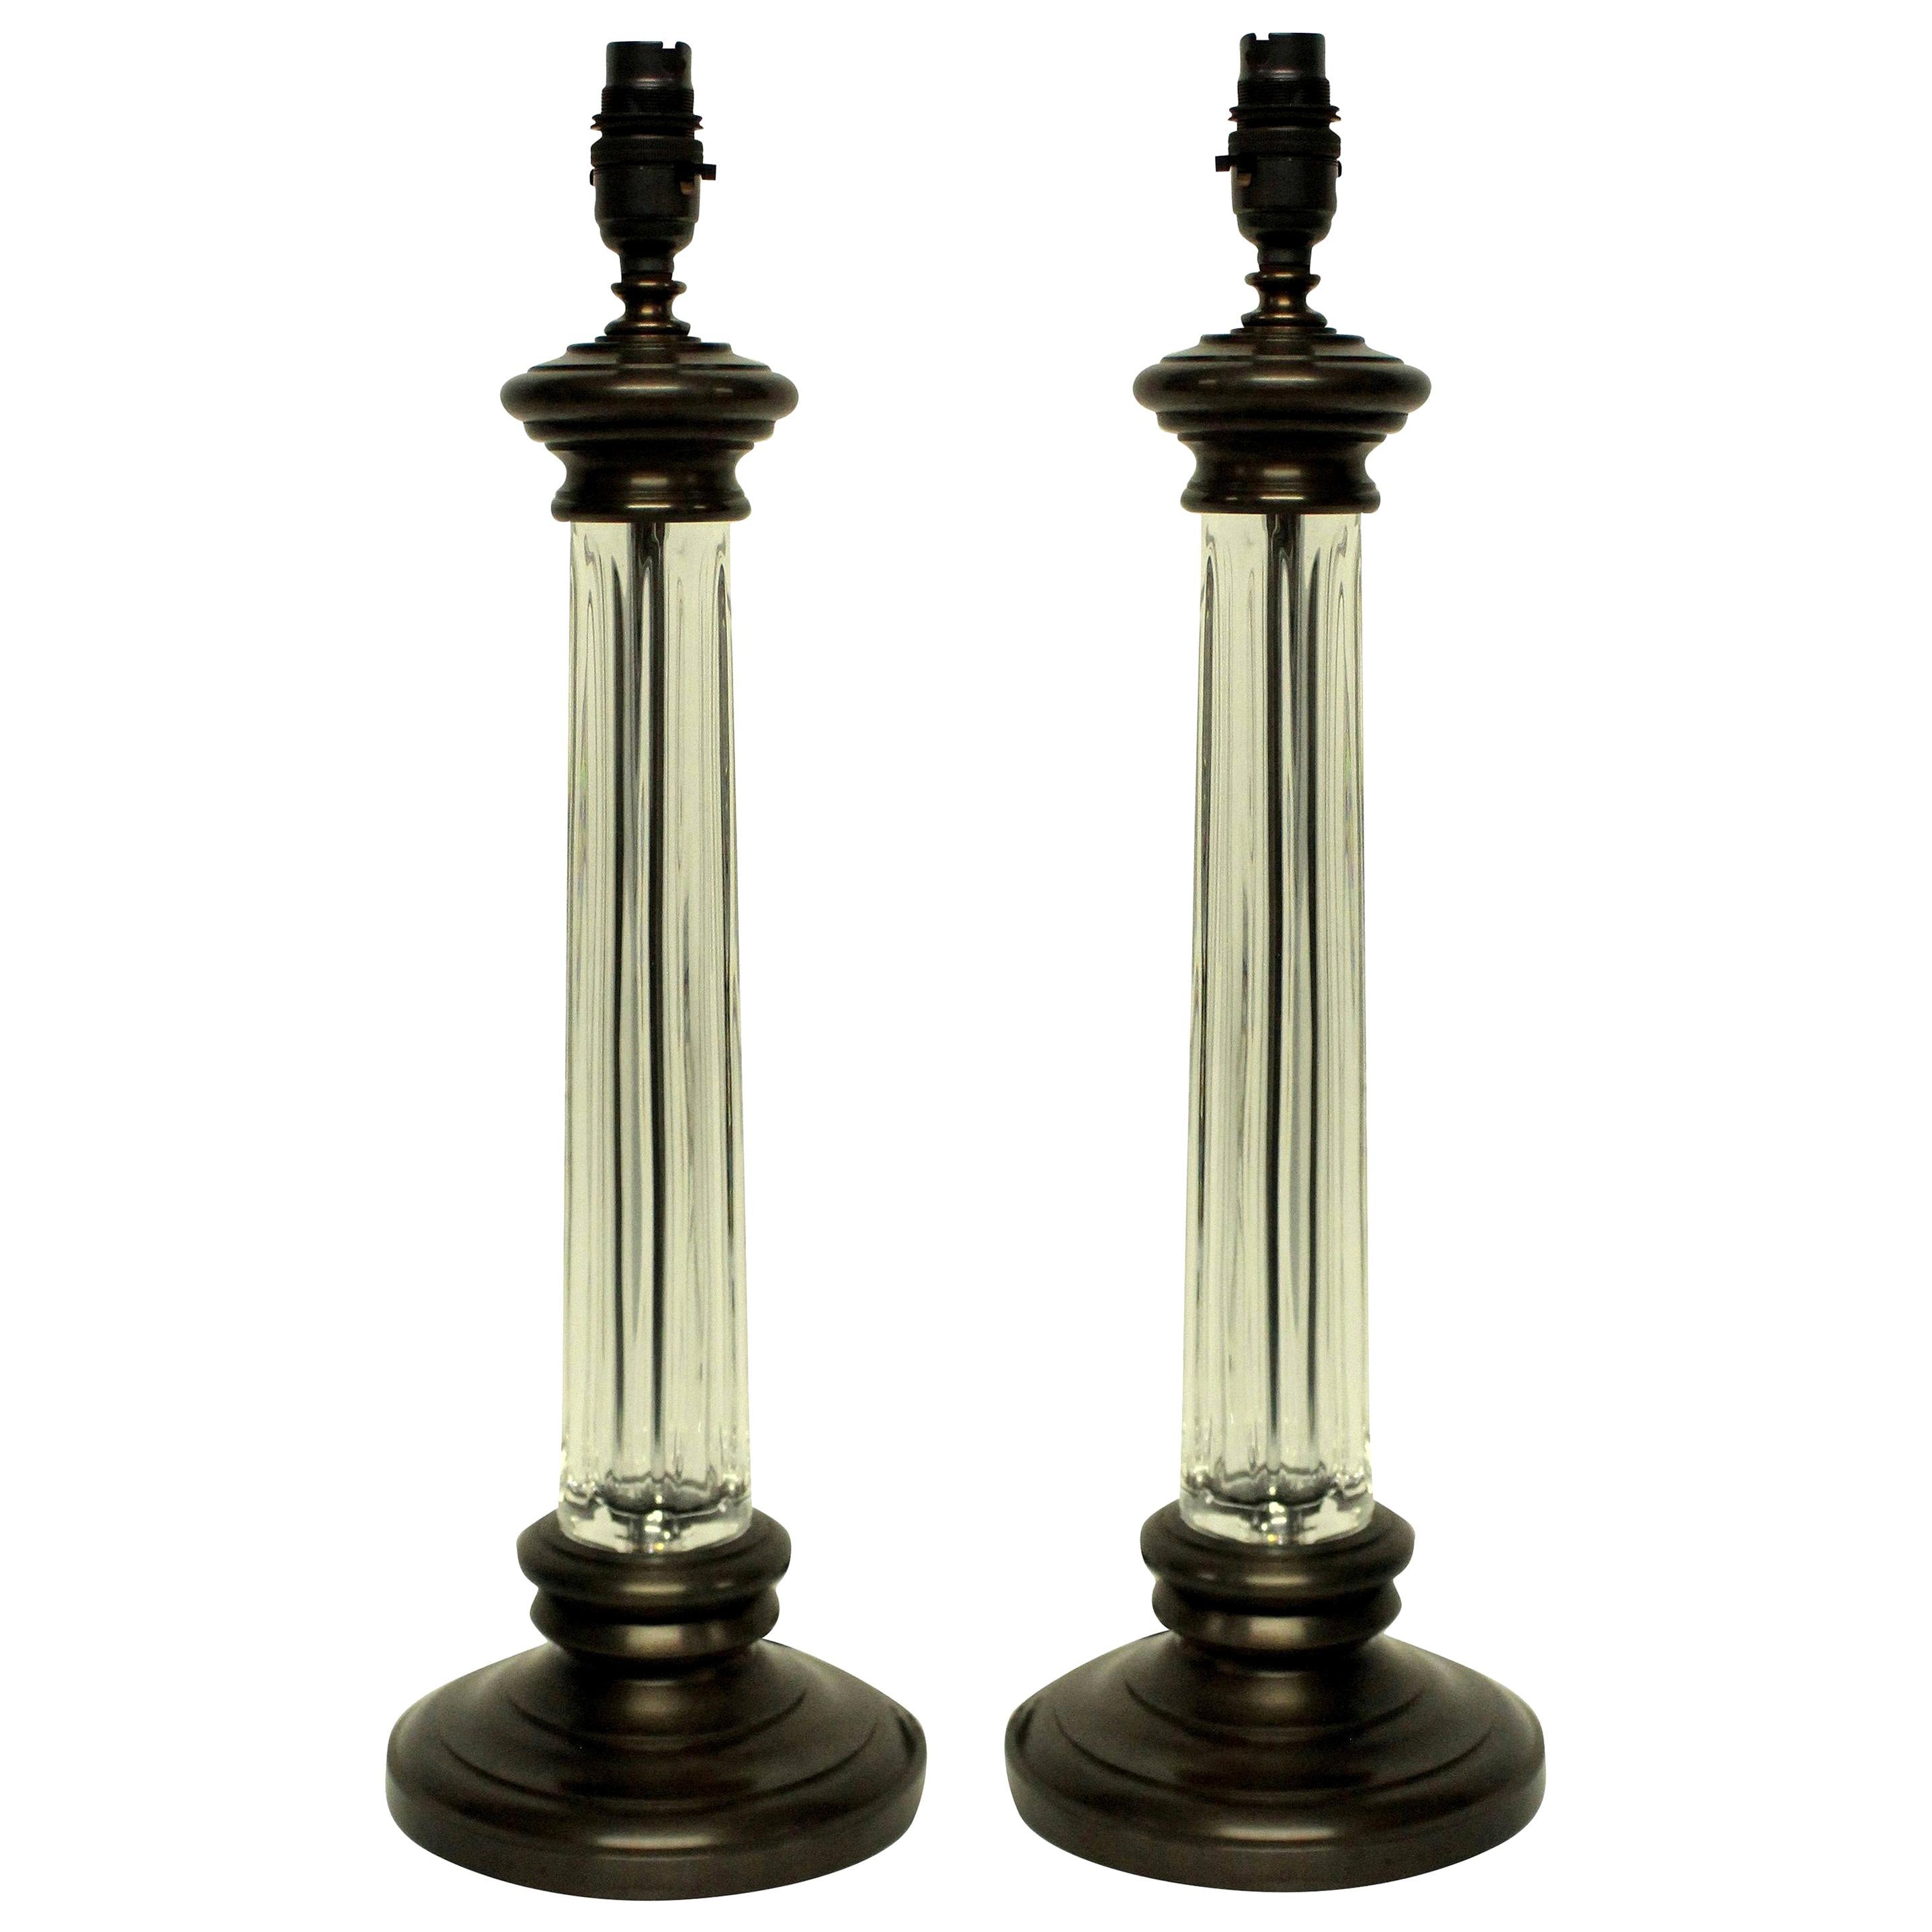 Pair of English Cut-Glass Column Lamps